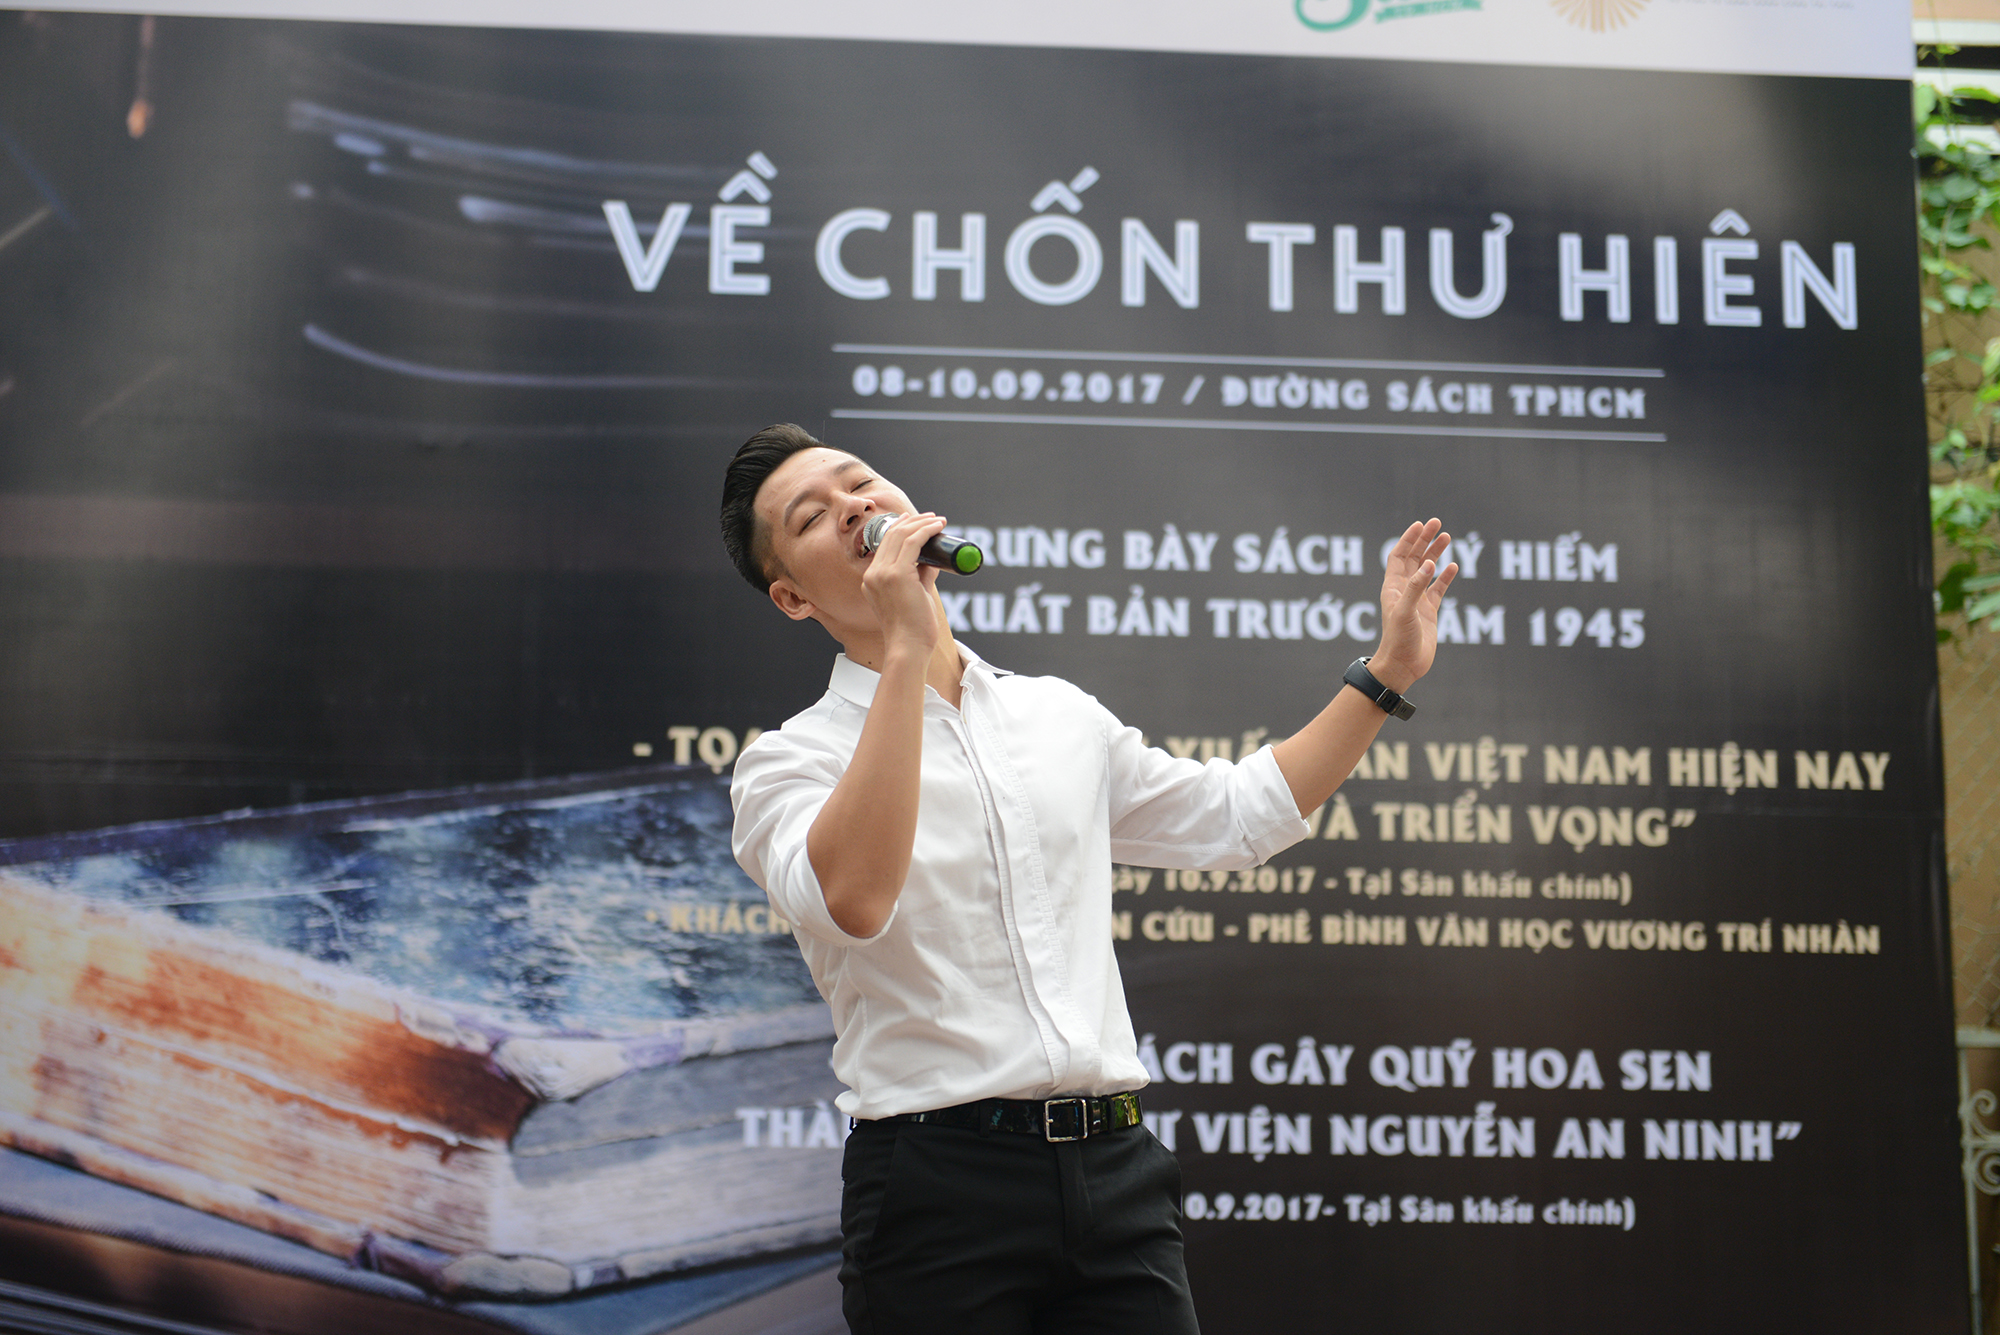 Duc Tuan bieu dien trong su kien Ve chon thu hien - Anh Khiem Huan